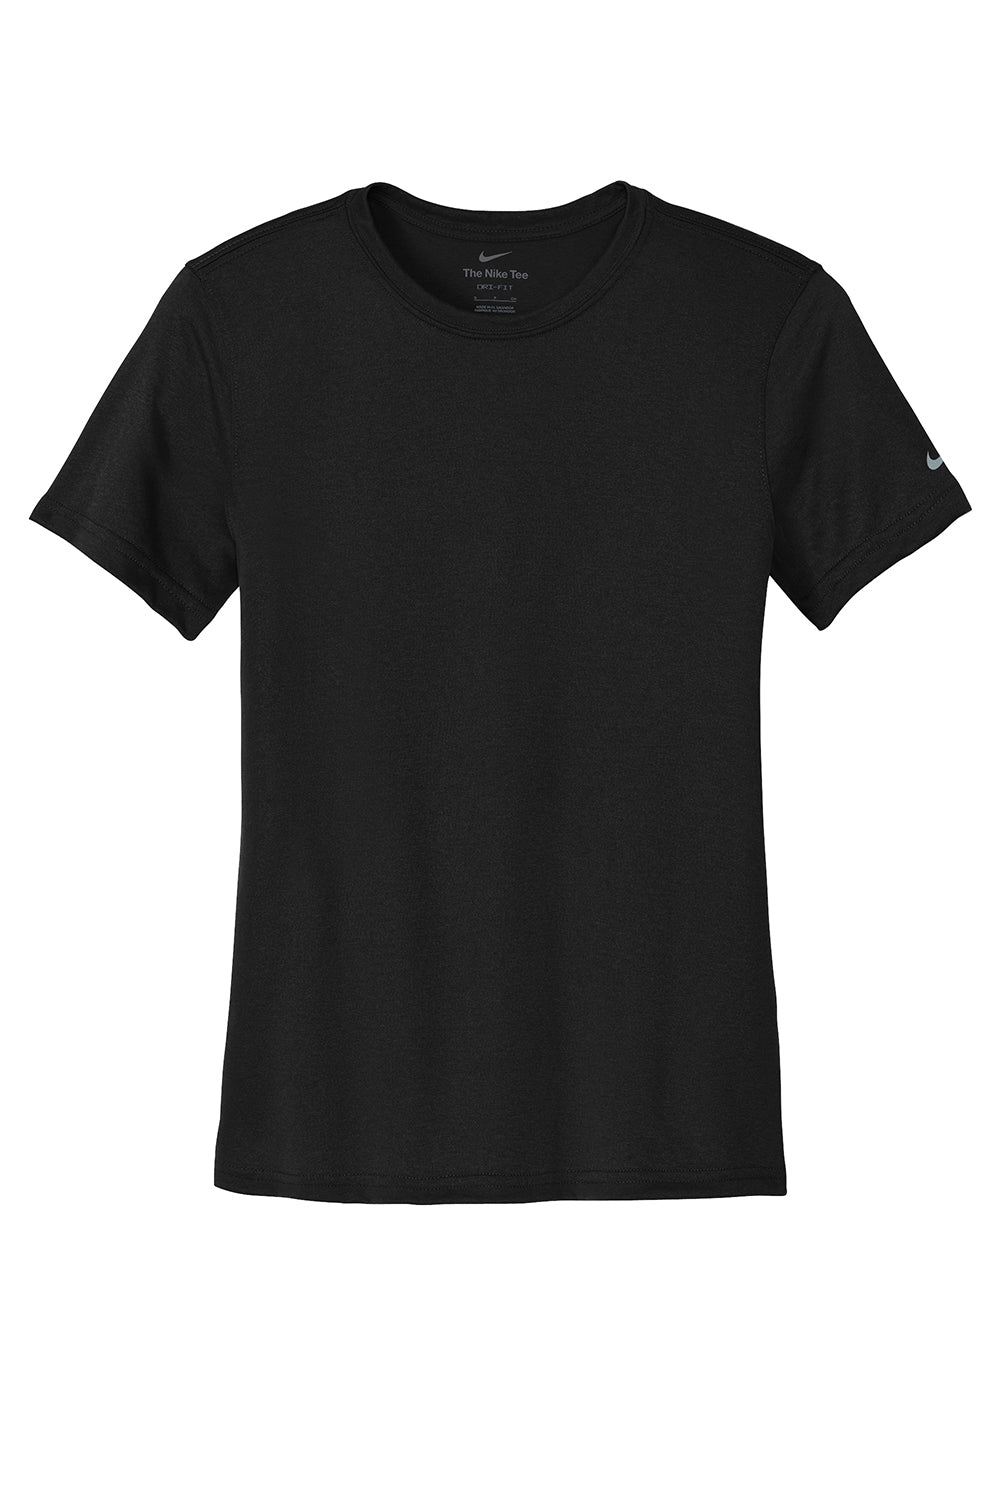 Nike NKDX8734 Womens rLegend Dri-Fit Moisture Wicking Short Sleeve Crewneck T-Shirt Black Flat Front